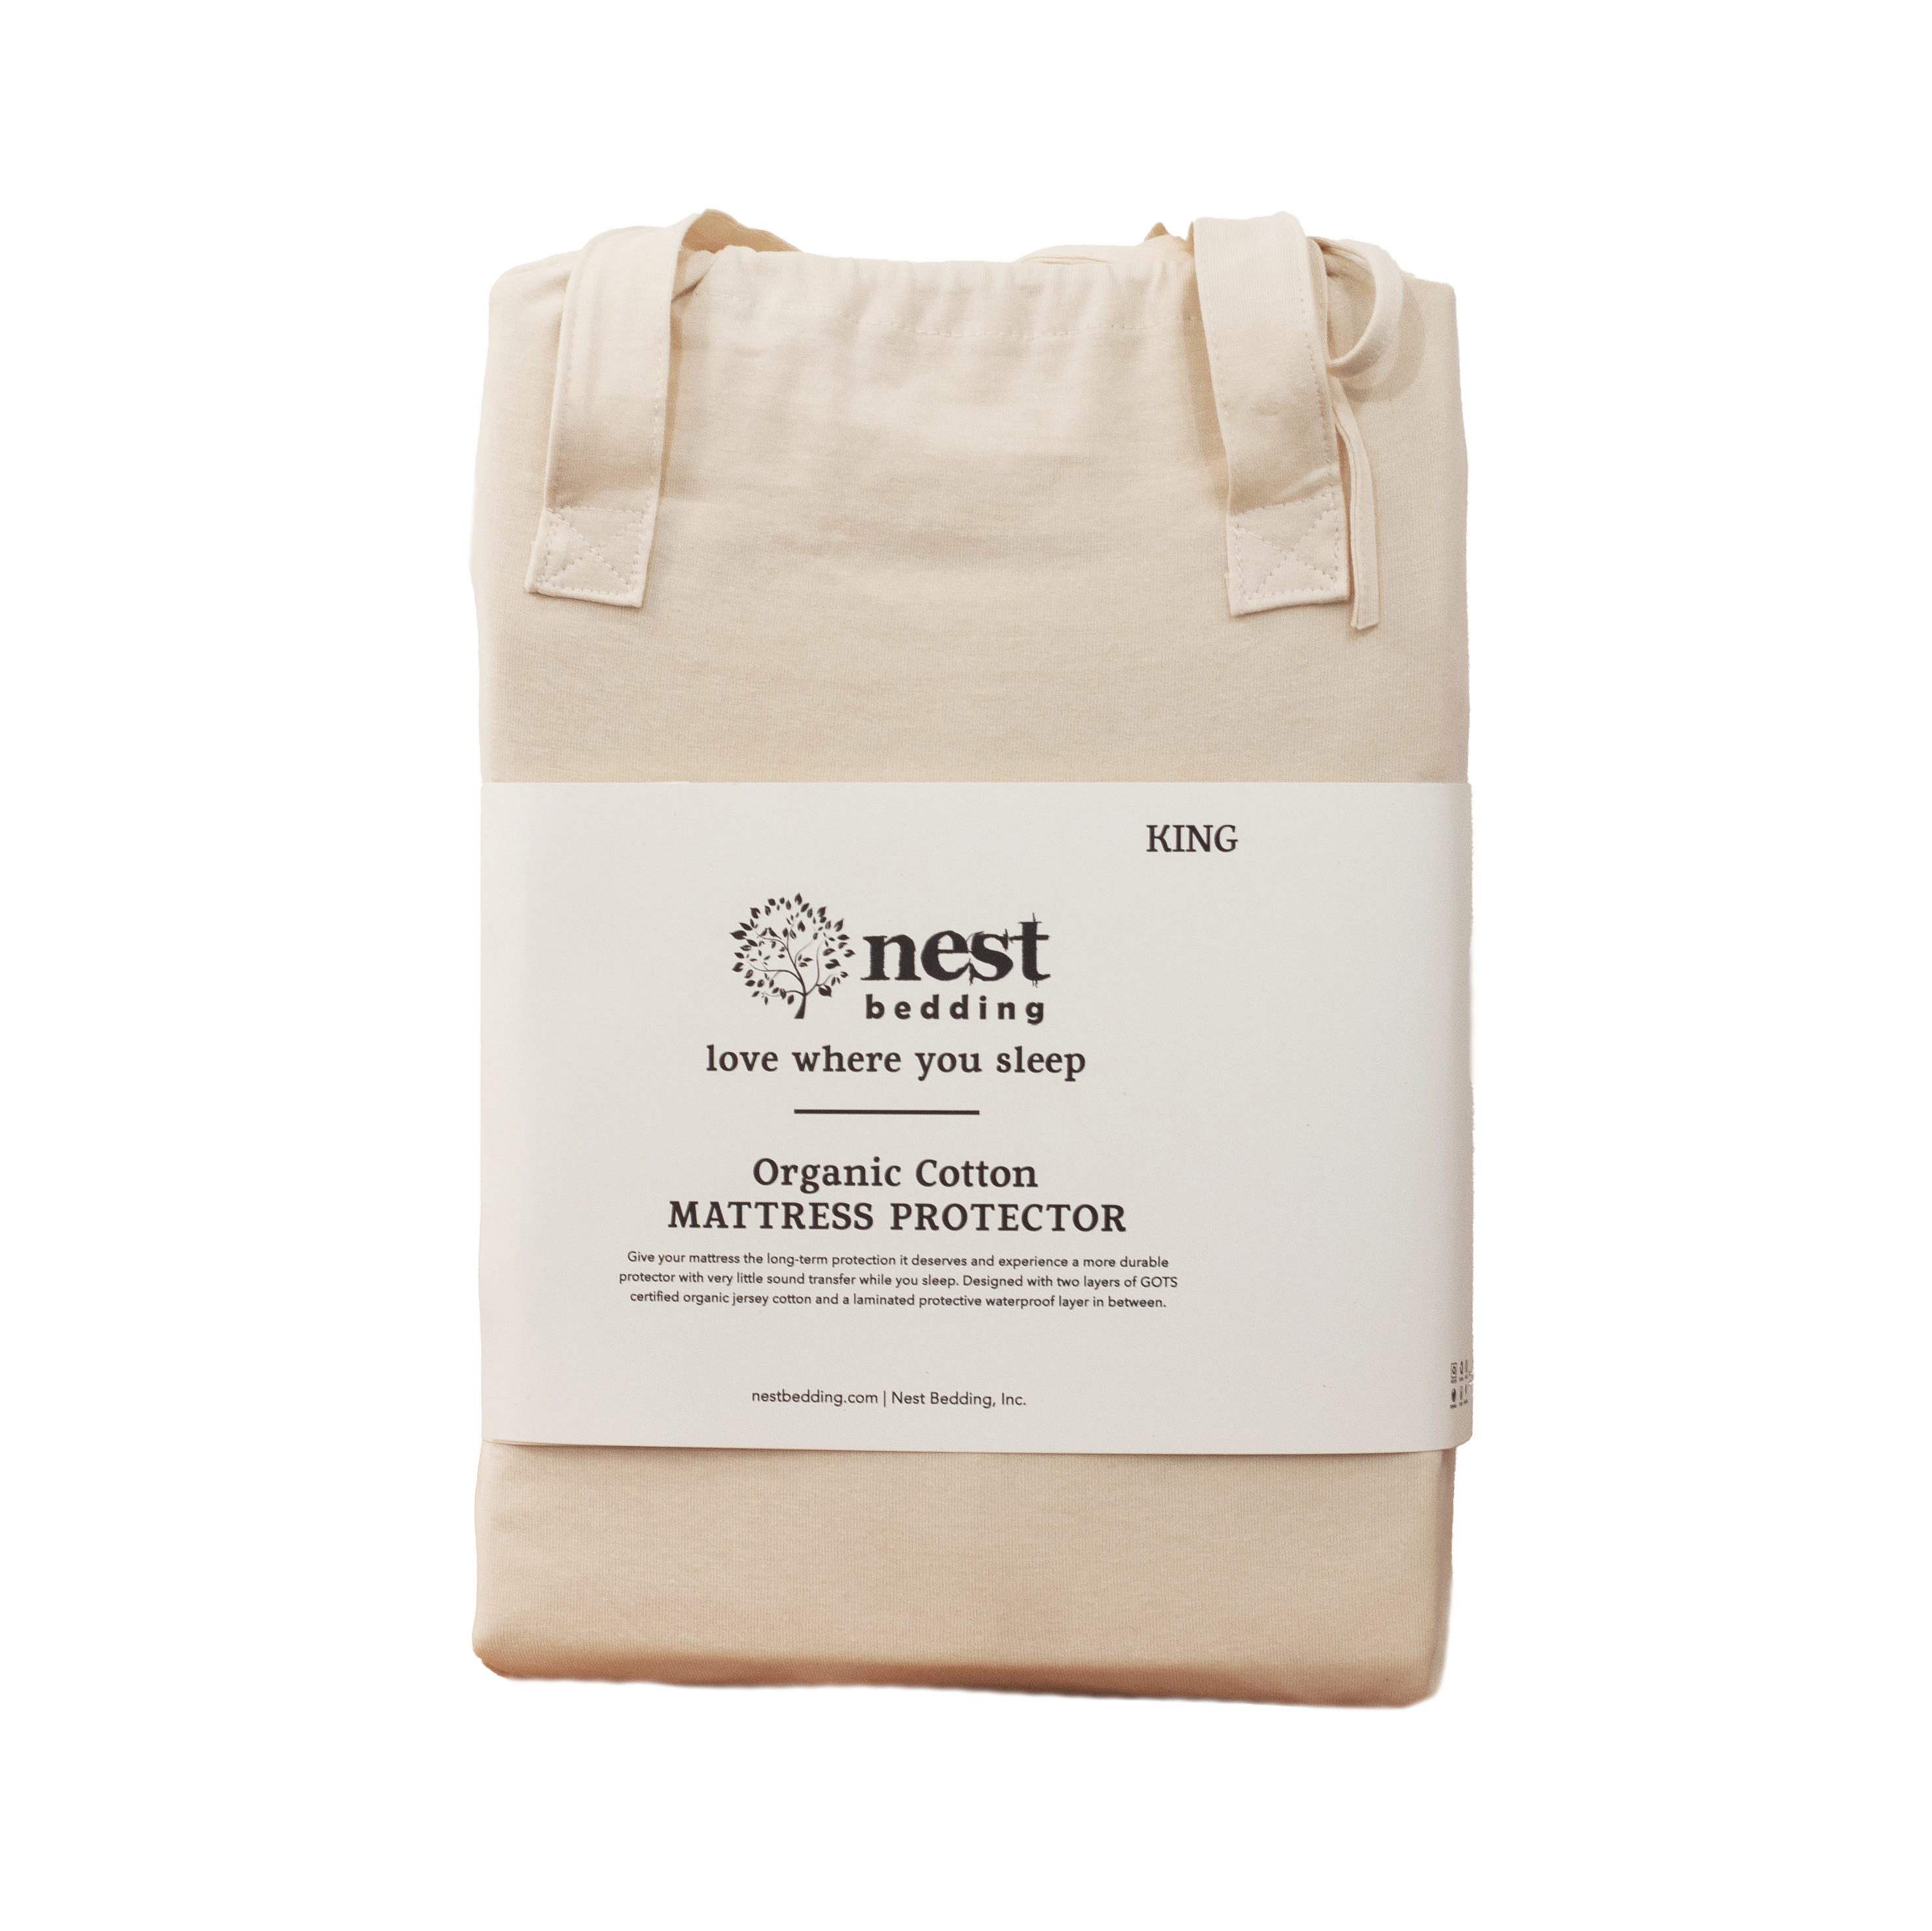 15" organic cotton waterproof mattress protector in cotton bag packaging